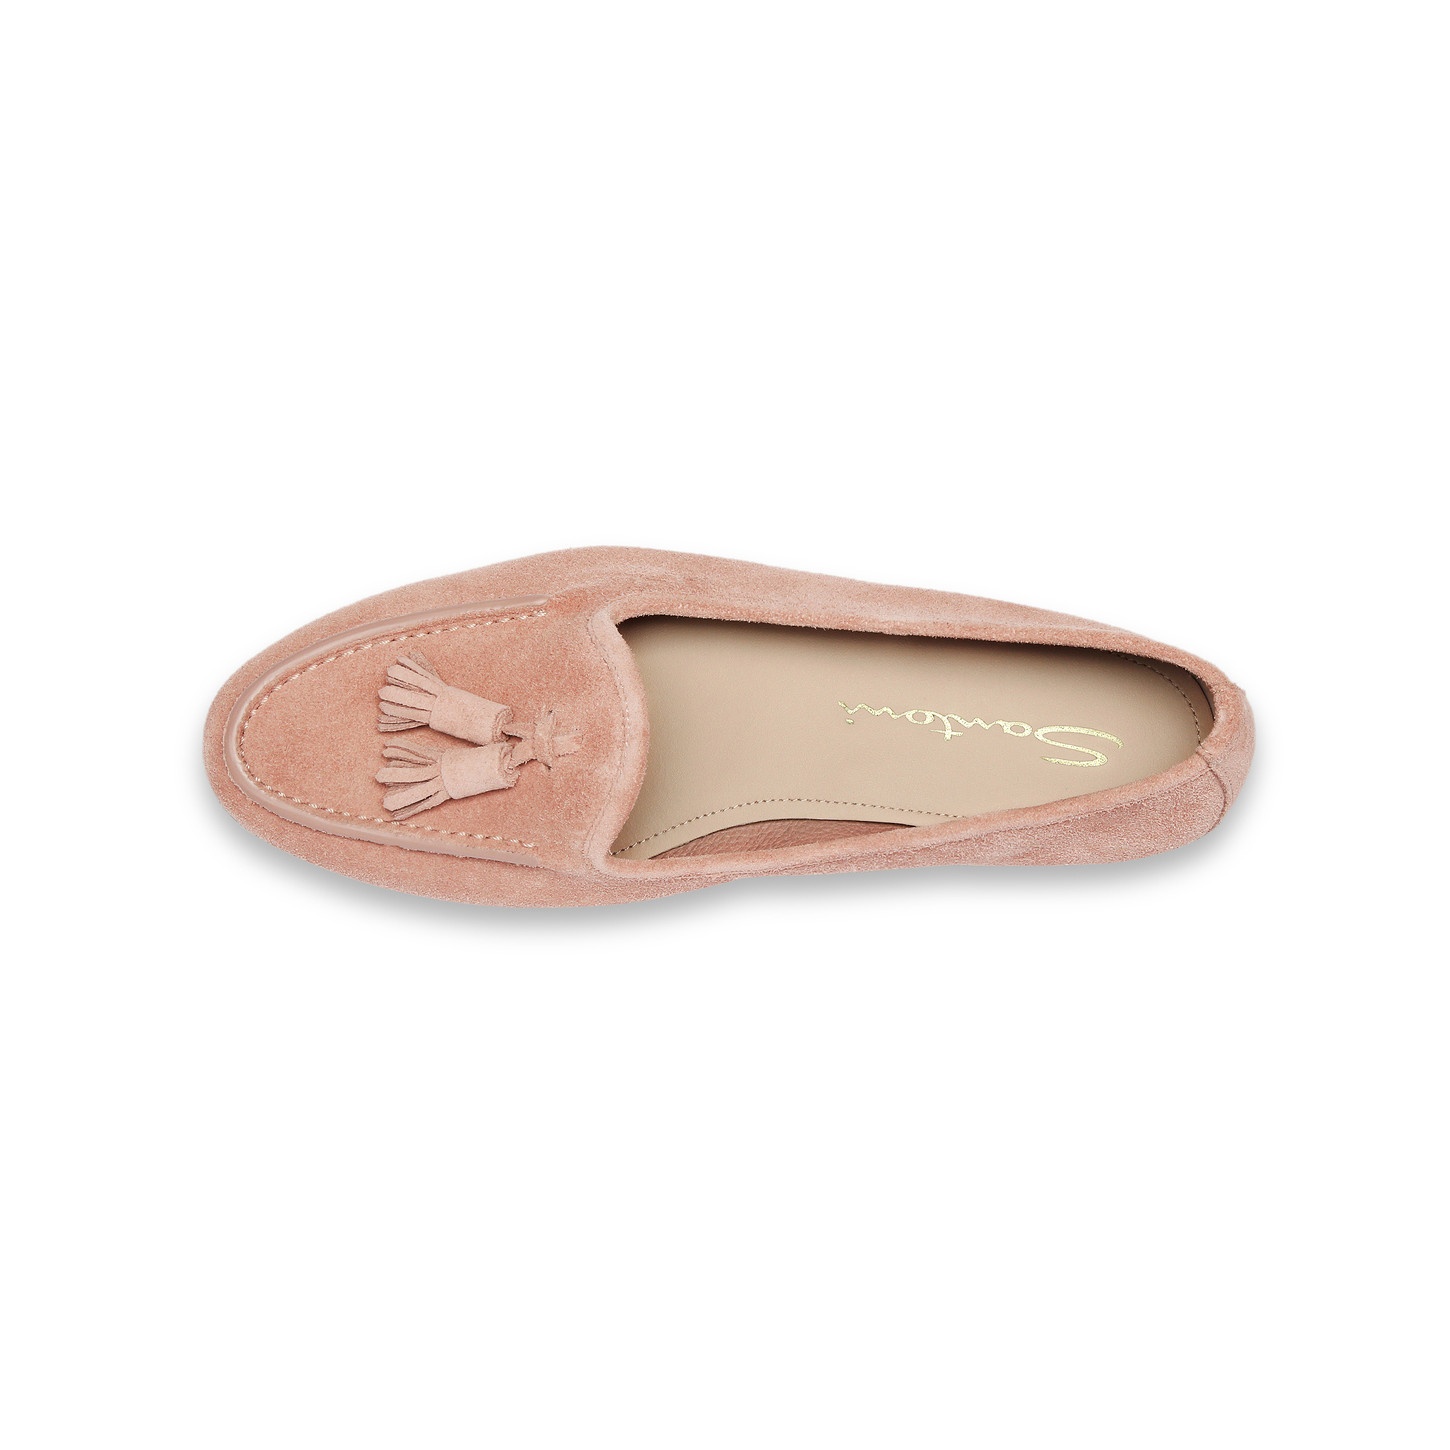 Women's pink suede Andrea tassel loafer - 5